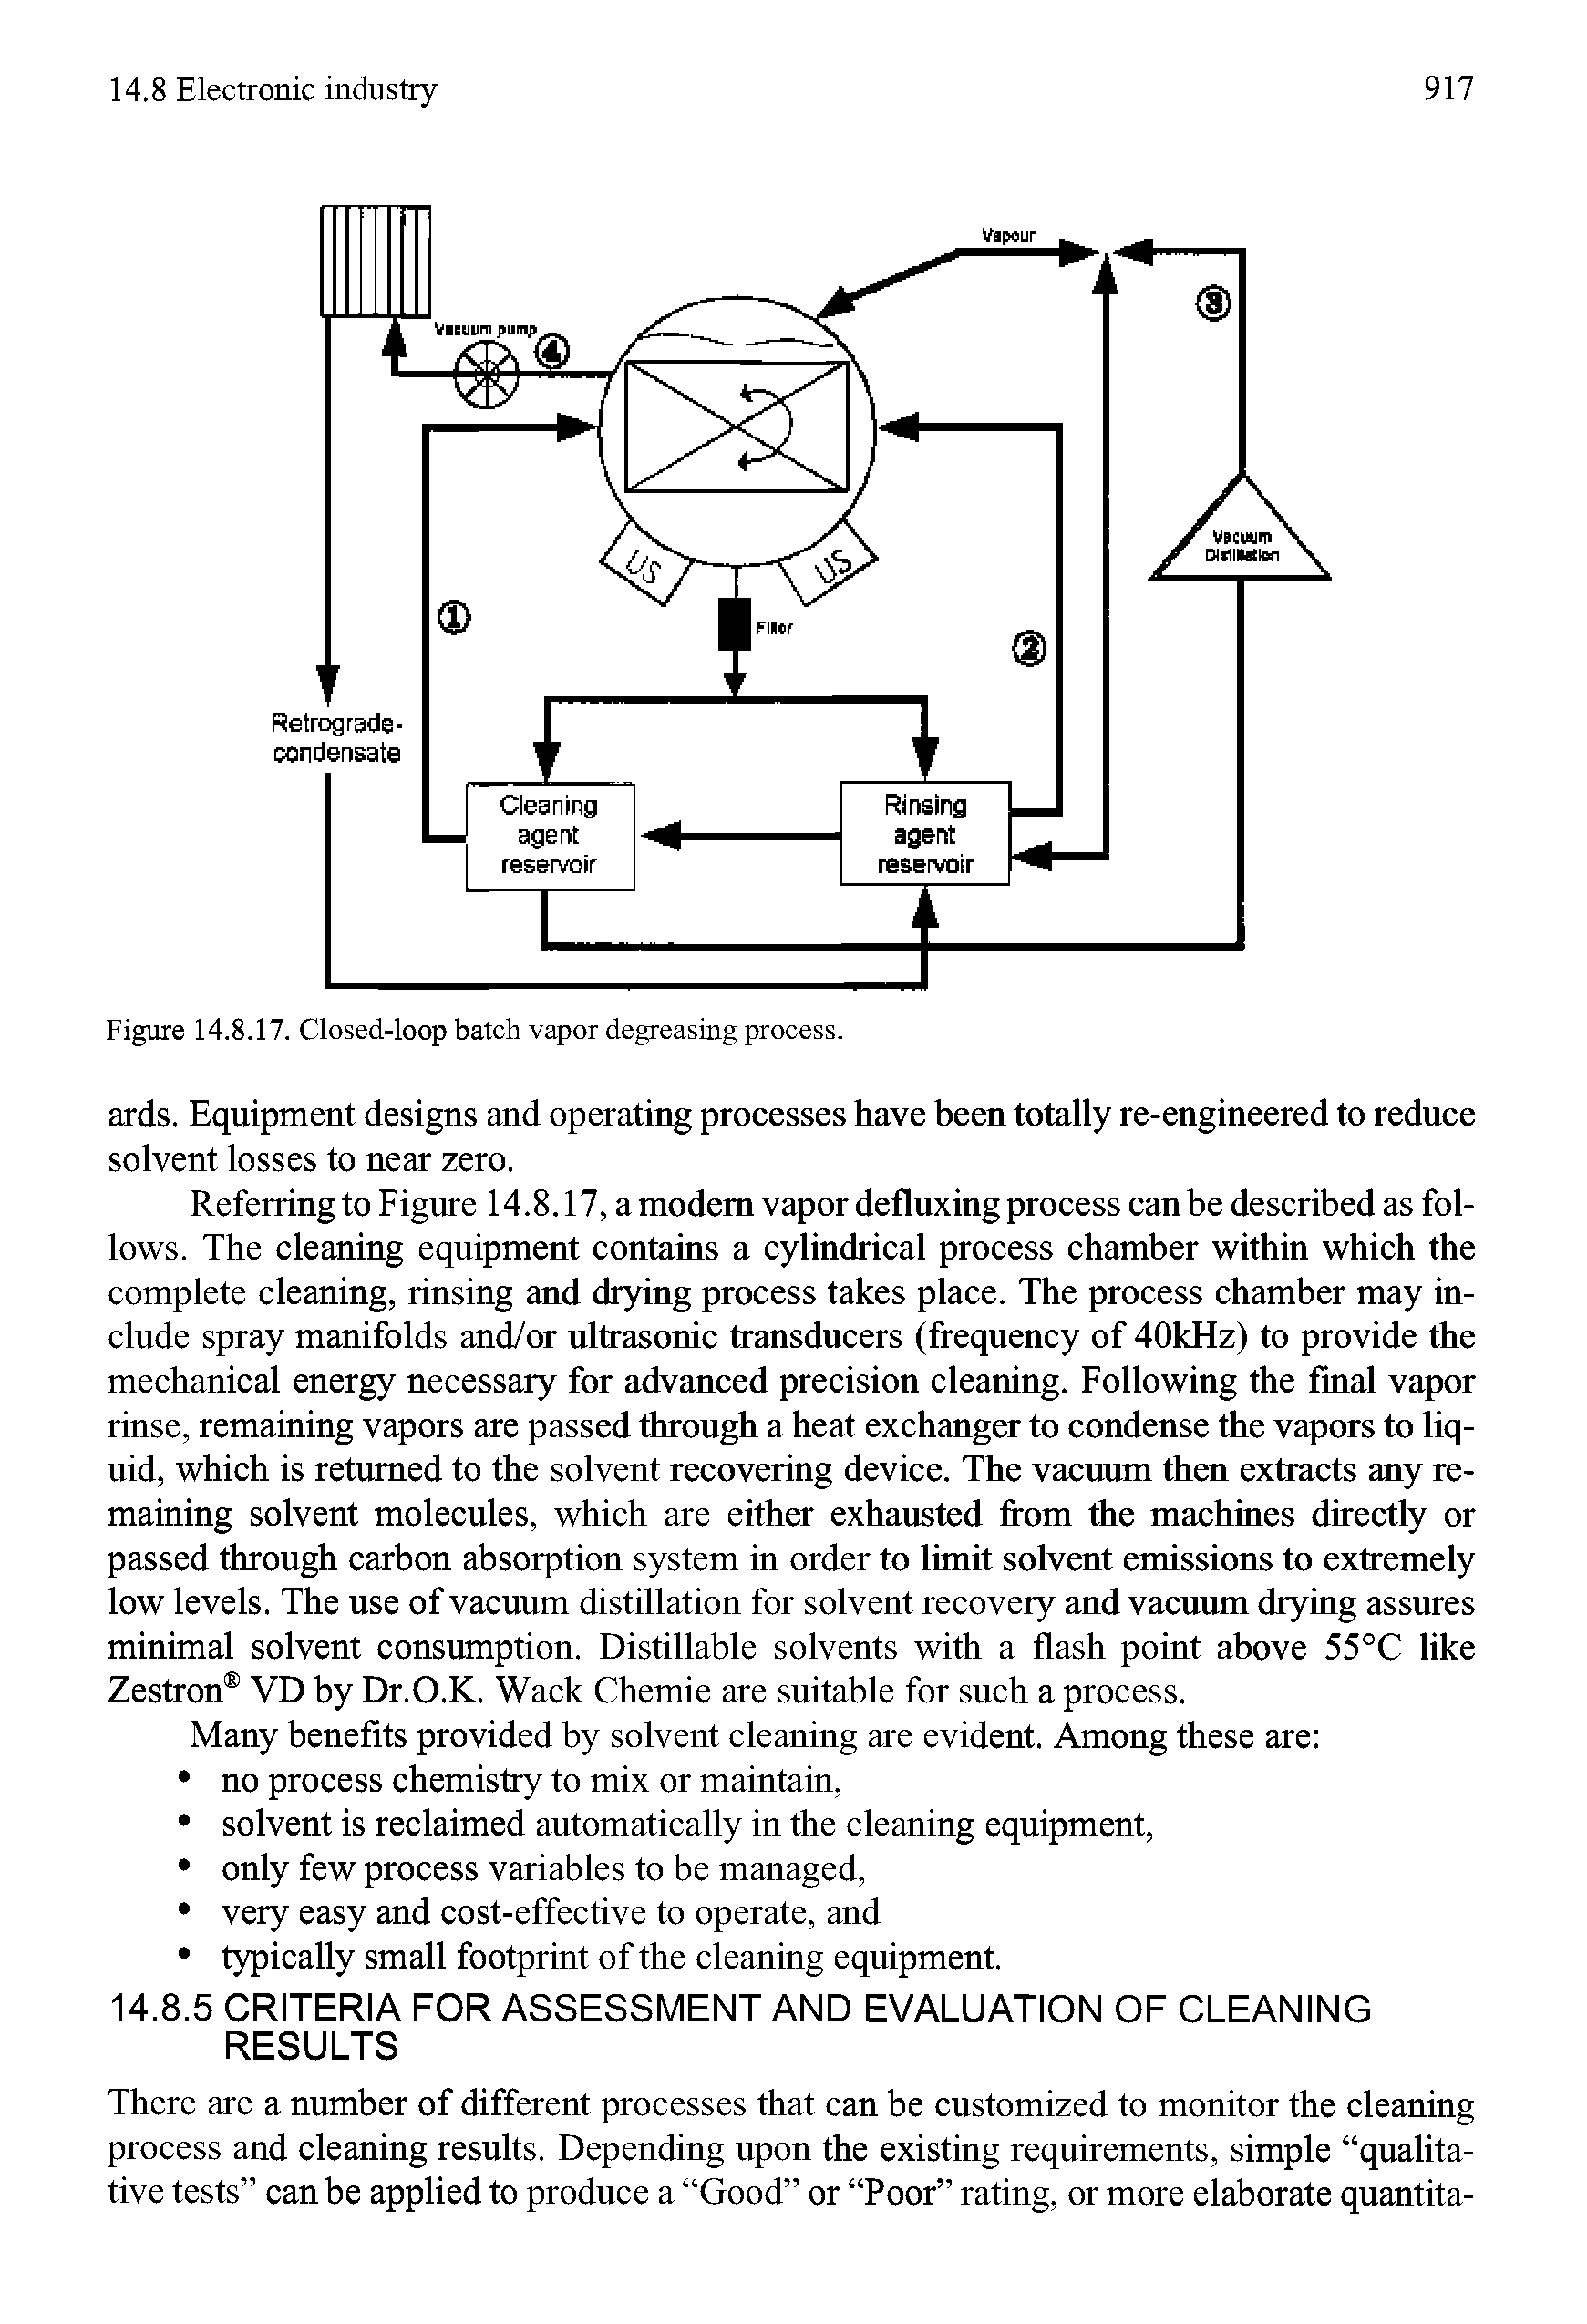 Figure 14.8.17. Closed-loop batch vapor degreasing process.